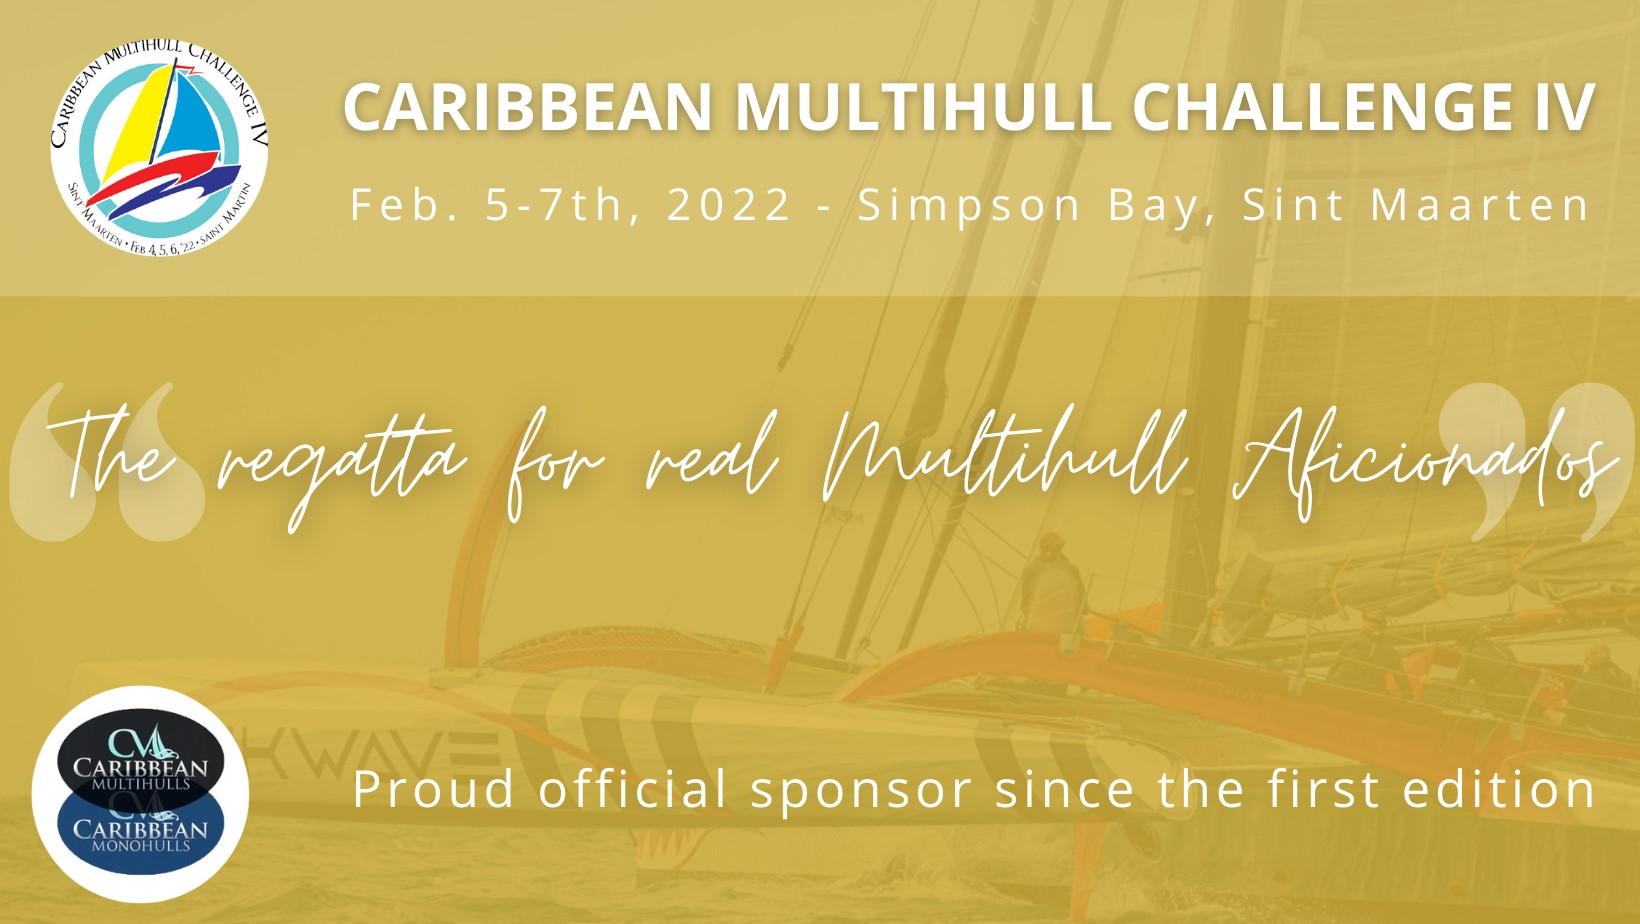 Caribbean Multihulls is a proud sponsor of the Caribbean Multihull Challenge